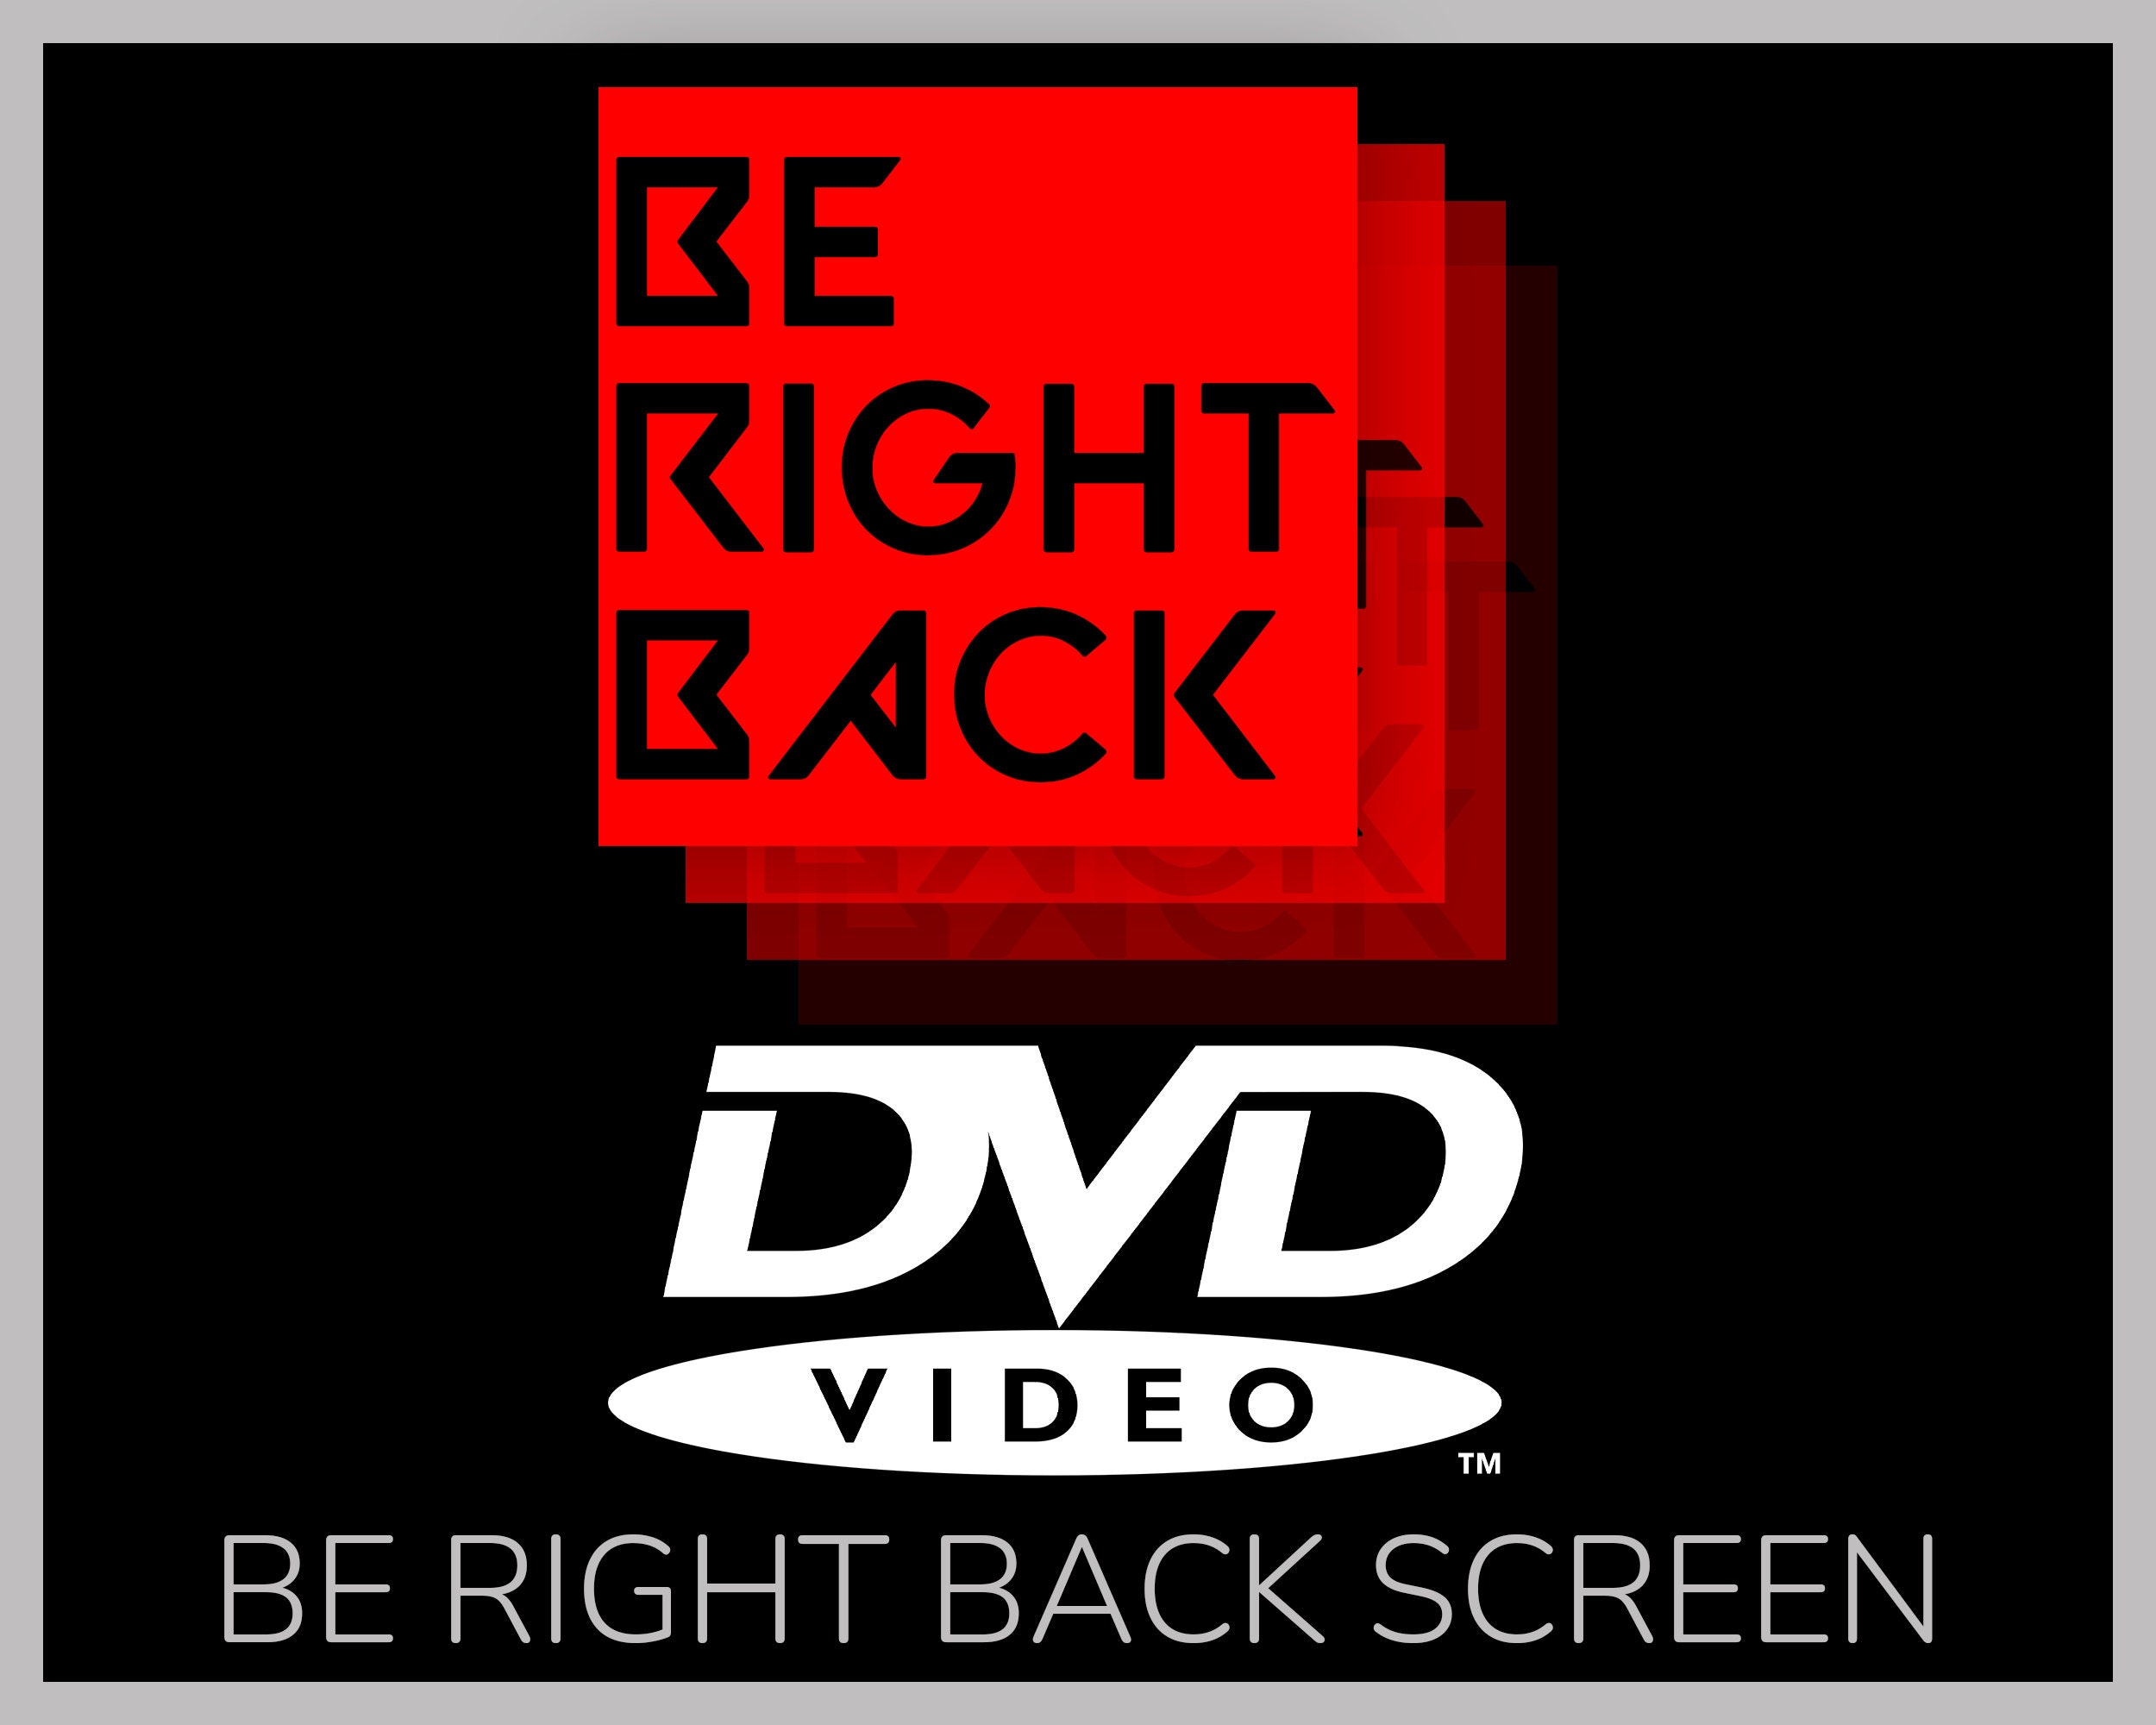 Bouncing DVD logo screensaver, remade in Dreams 